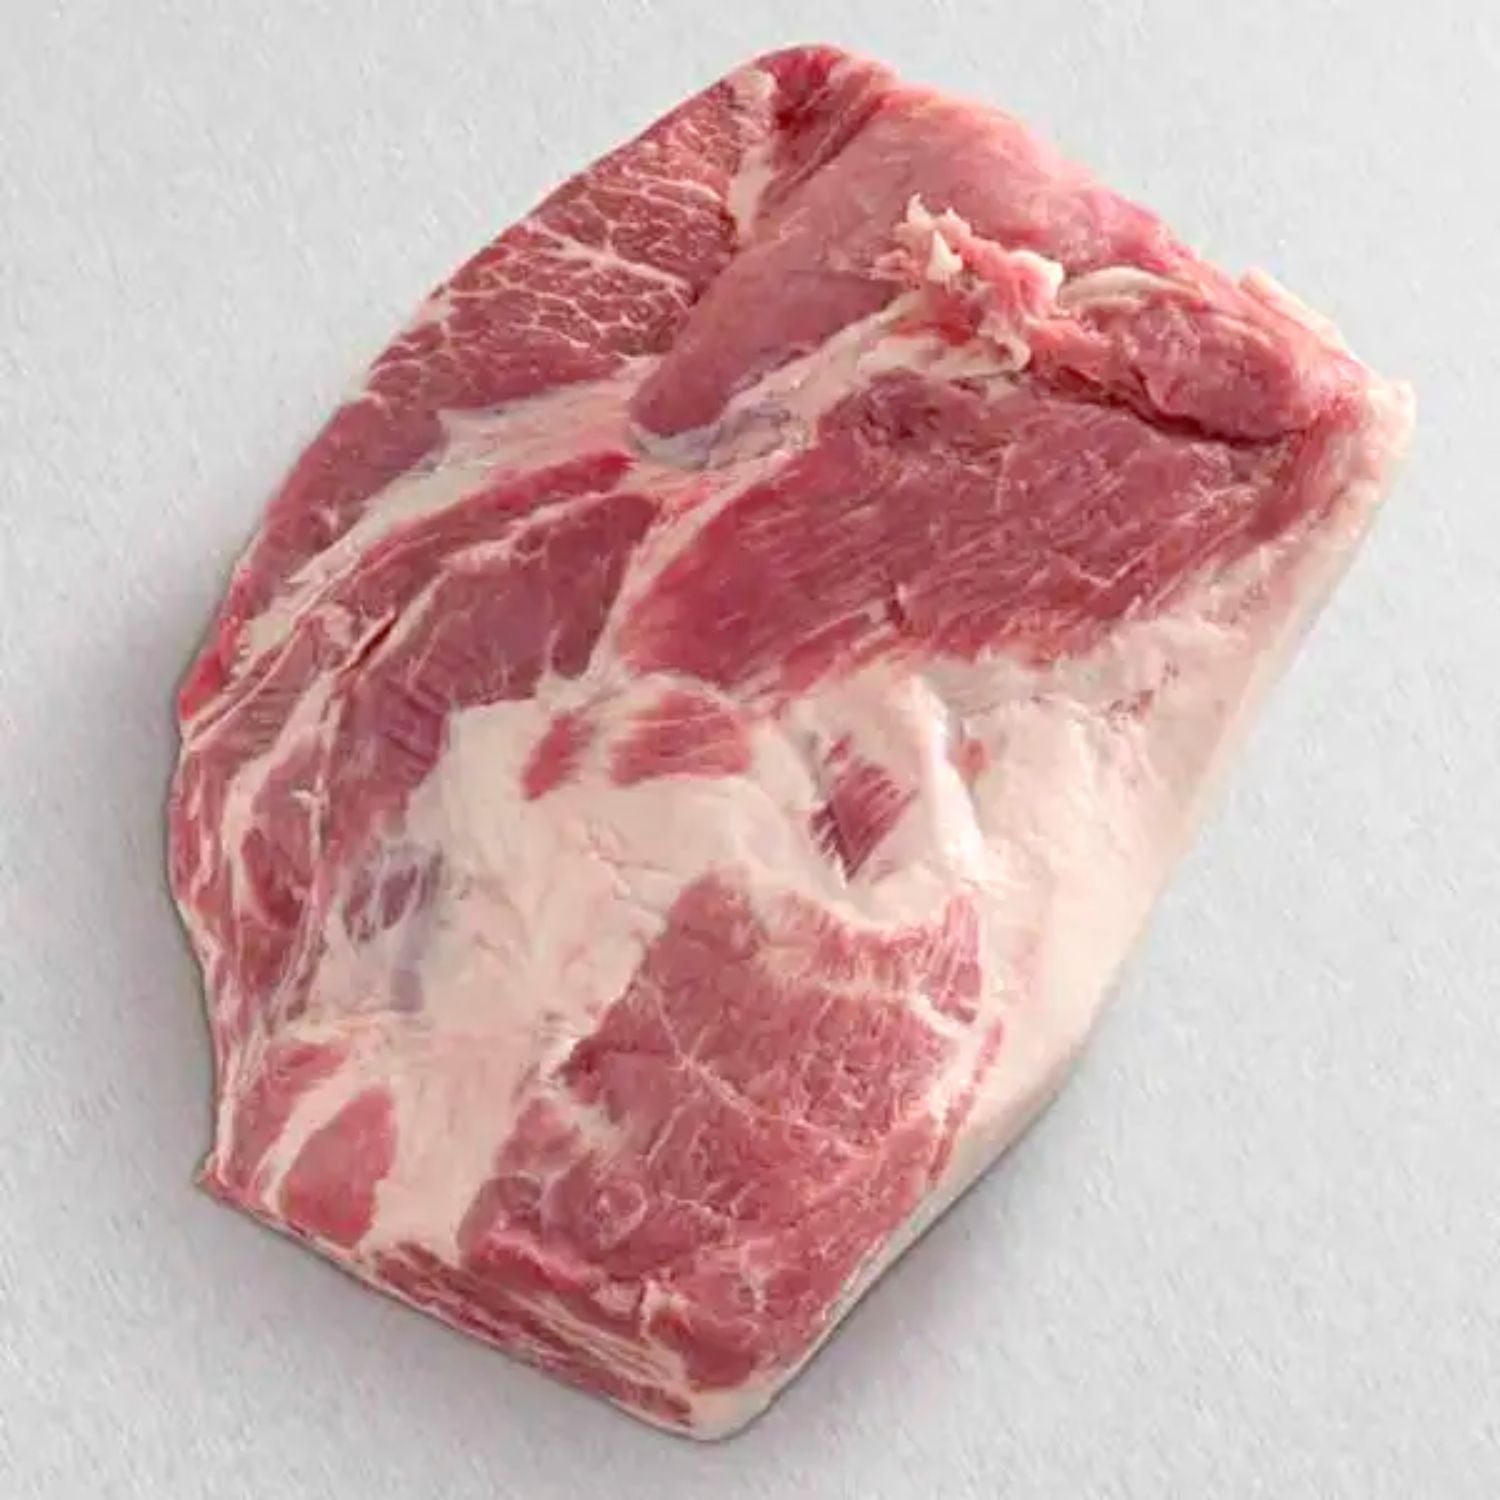 US Kurobuta Pork Collar premium cut from MeatKing.hk2